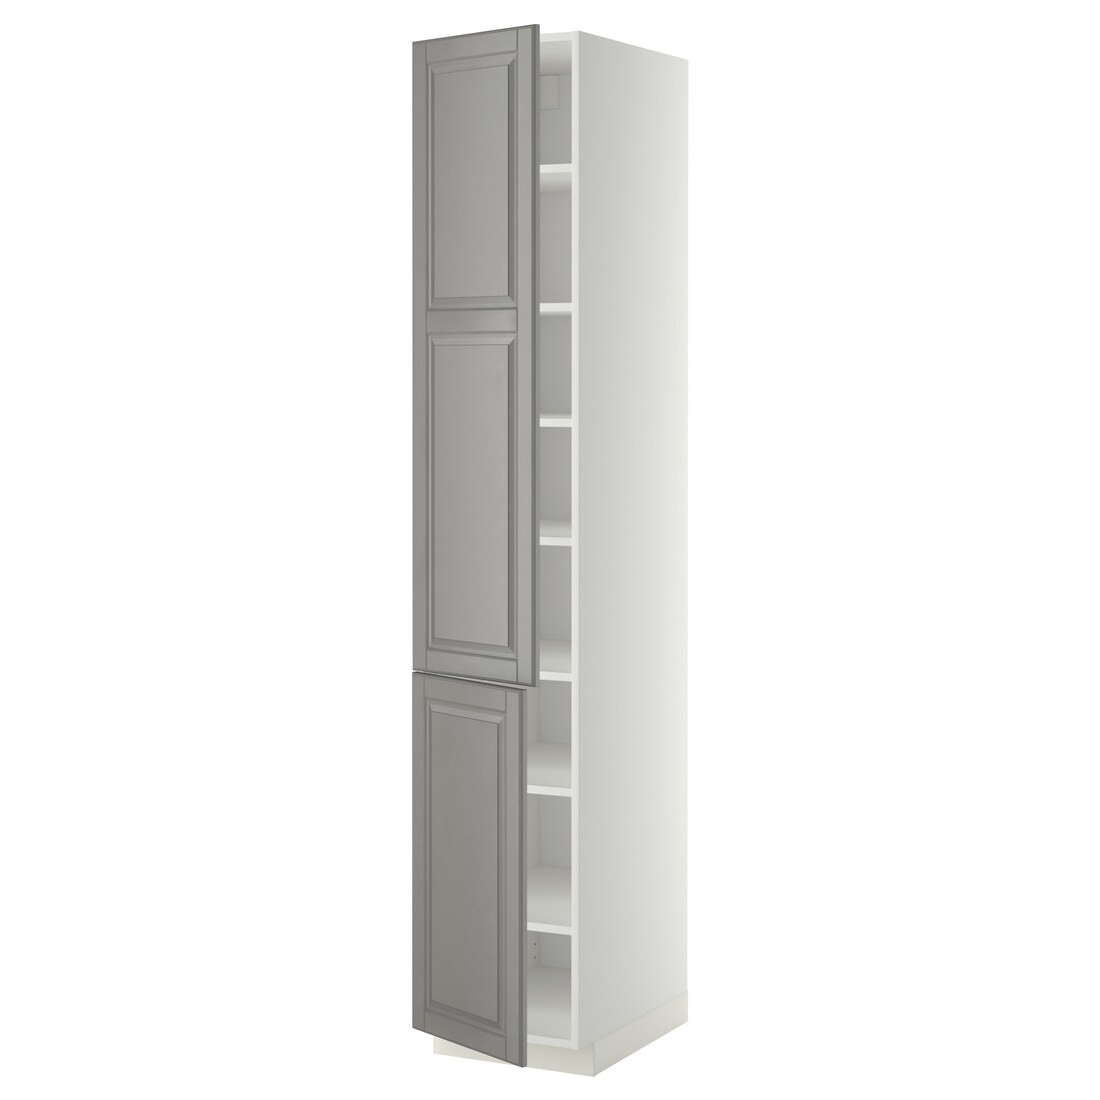 IKEA METOD МЕТОД Высокий шкаф с полками / 2 дверцы, белый / Bodbyn серый, 40x60x220 см 09458749 | 094.587.49